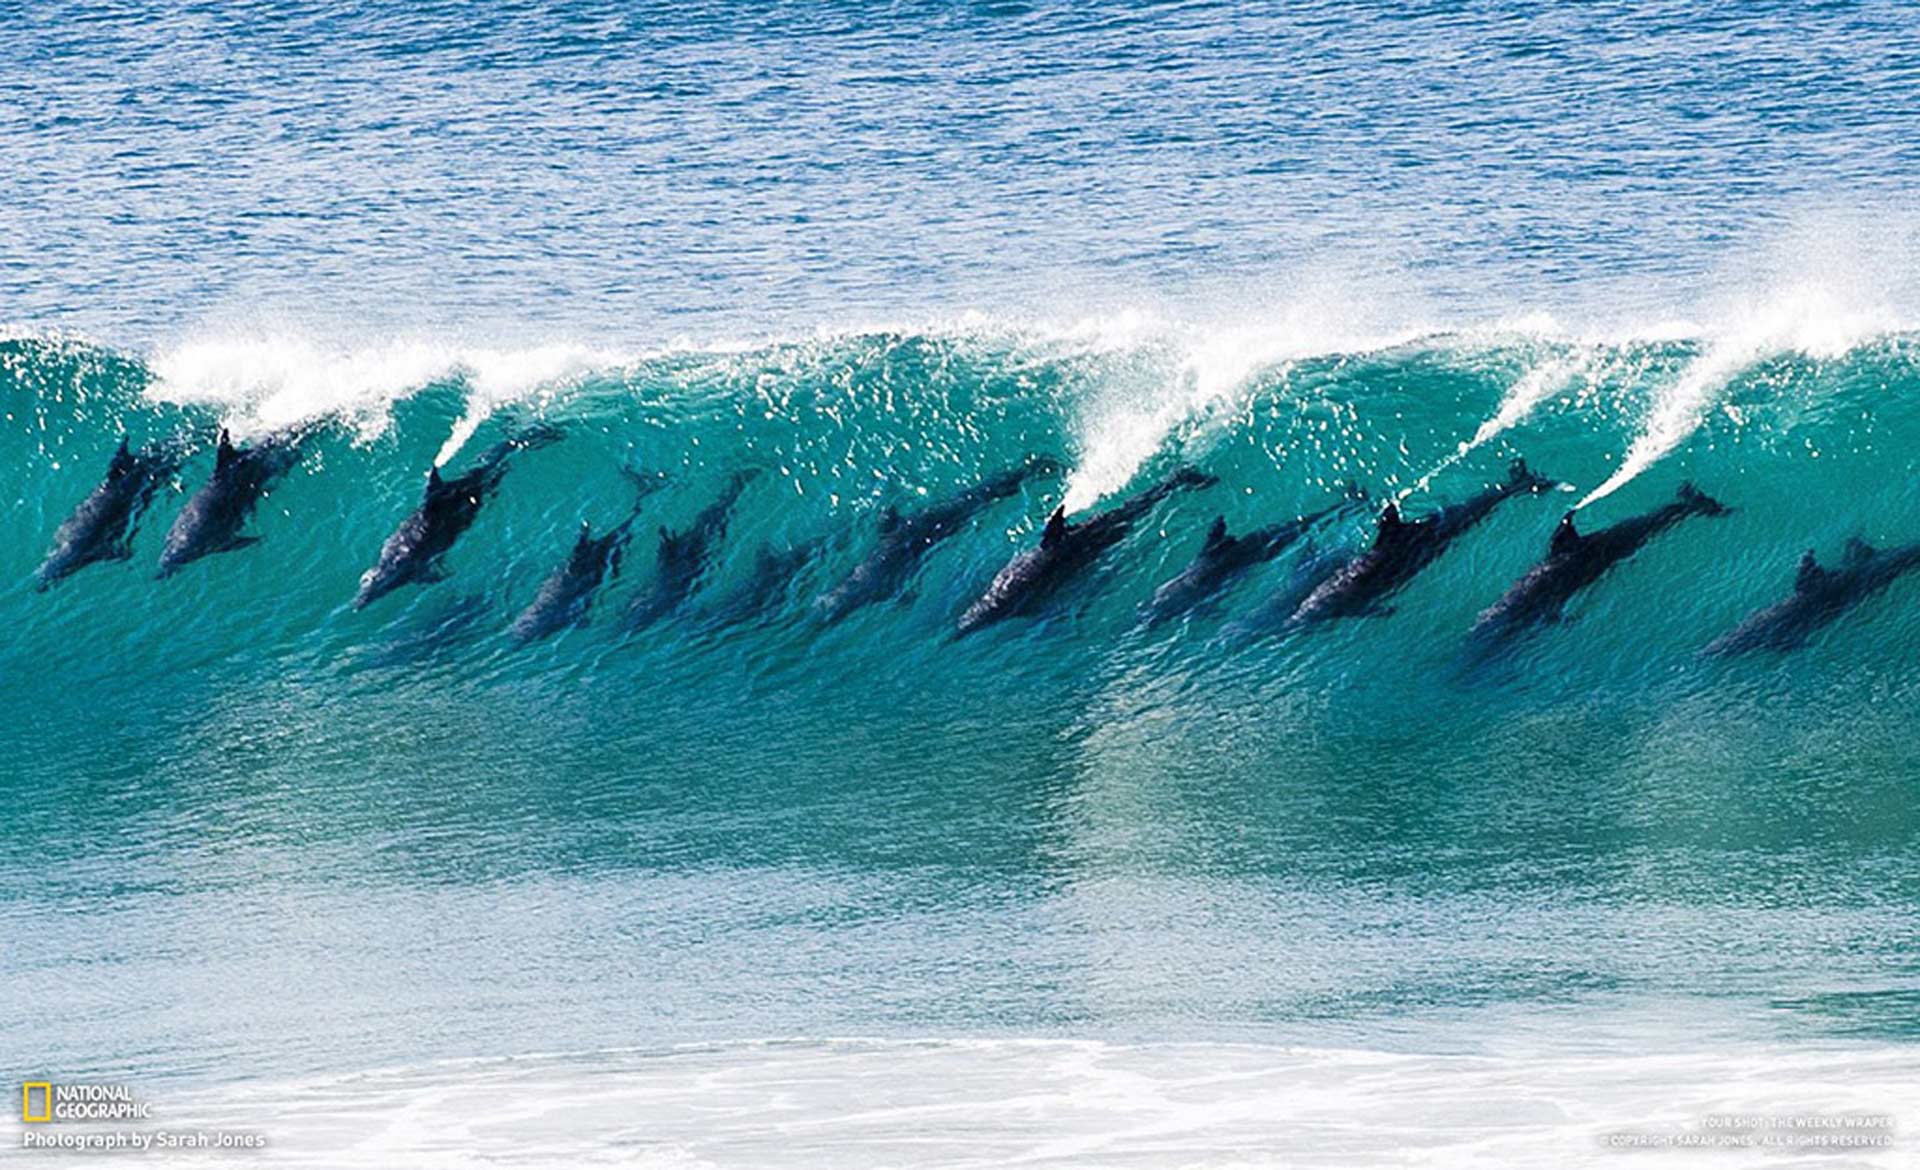 Wild dolphins surfing waves at Wategos Beach, Byron Bay Australia. Photo: Sarah Jones